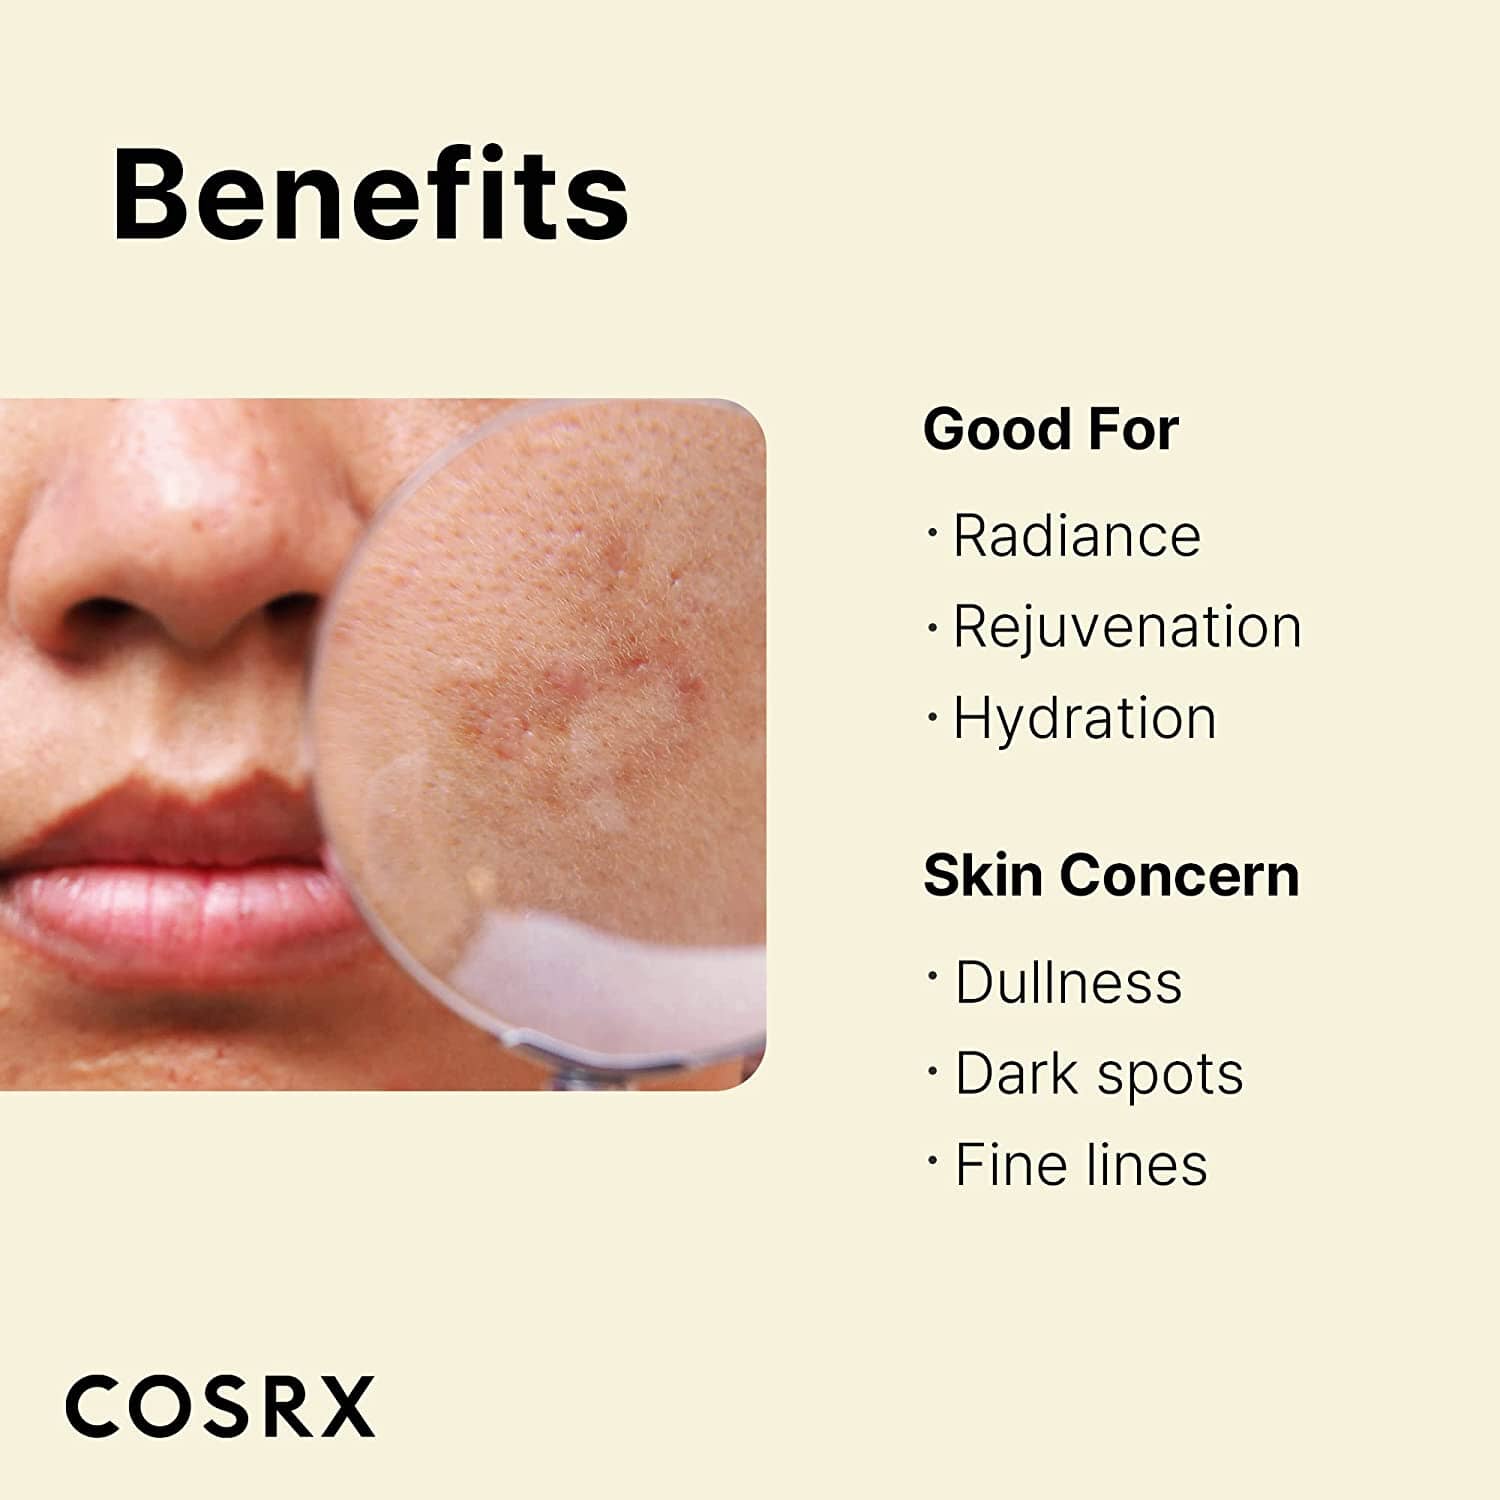 COSRX The Vitamin C 23 Serum 20ml Skin Care COSRX ORION XO Sri Lanka